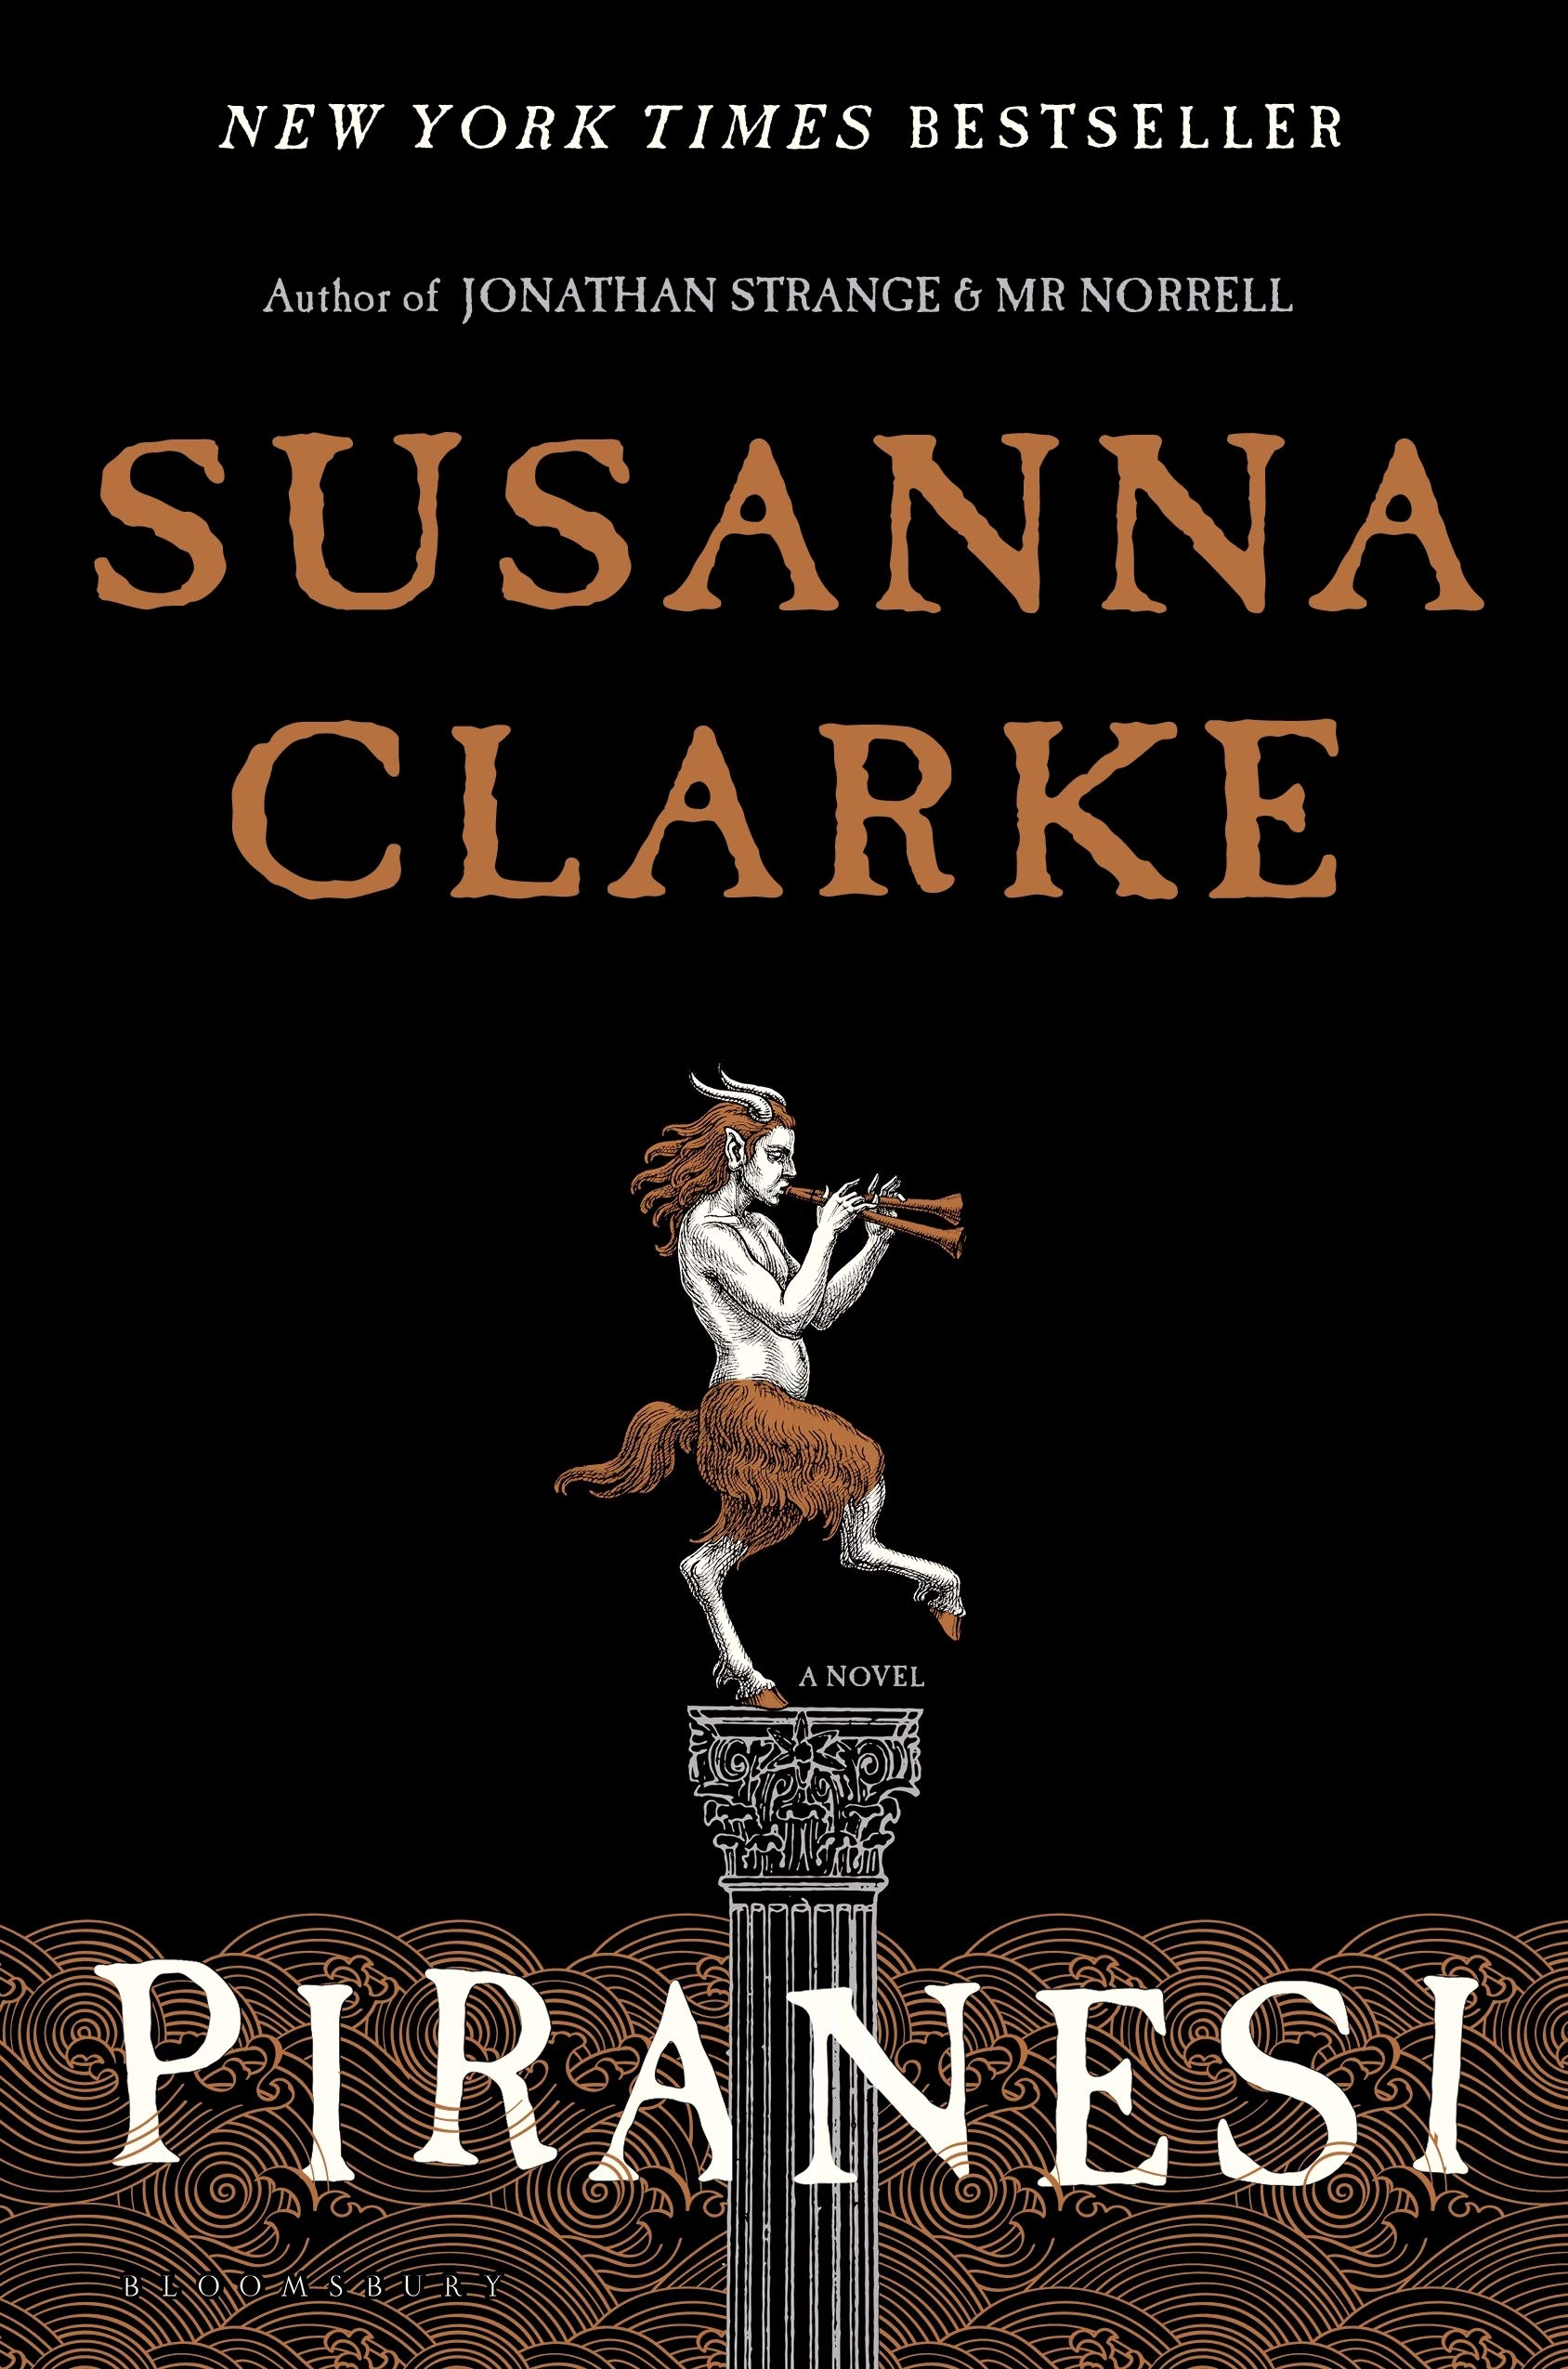 « Piranesi », de Susanna Clark